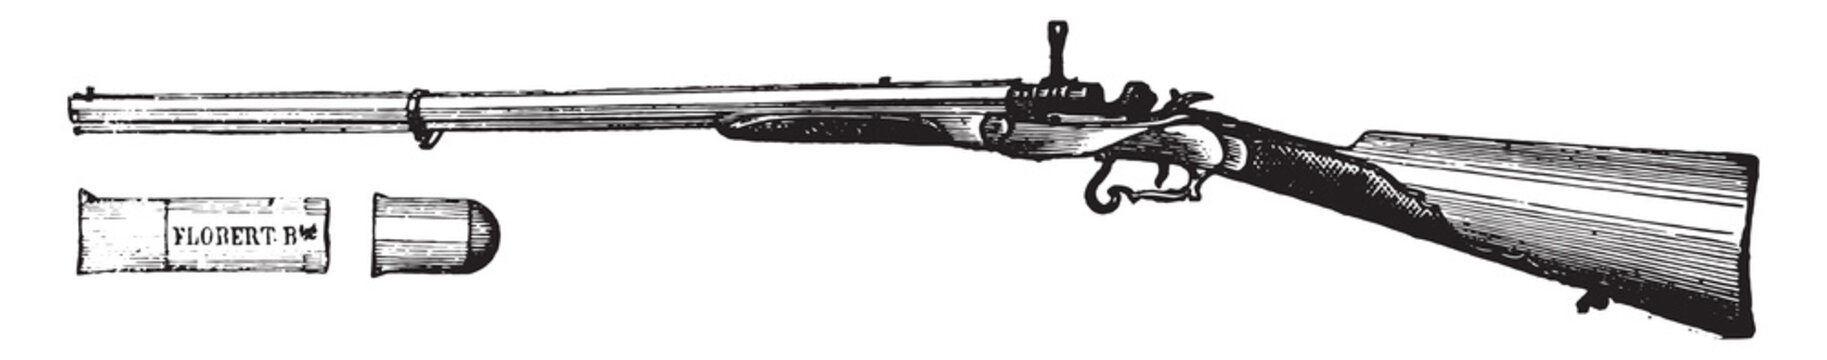 Rifle flobert movement Chassepot, vintage engraving.